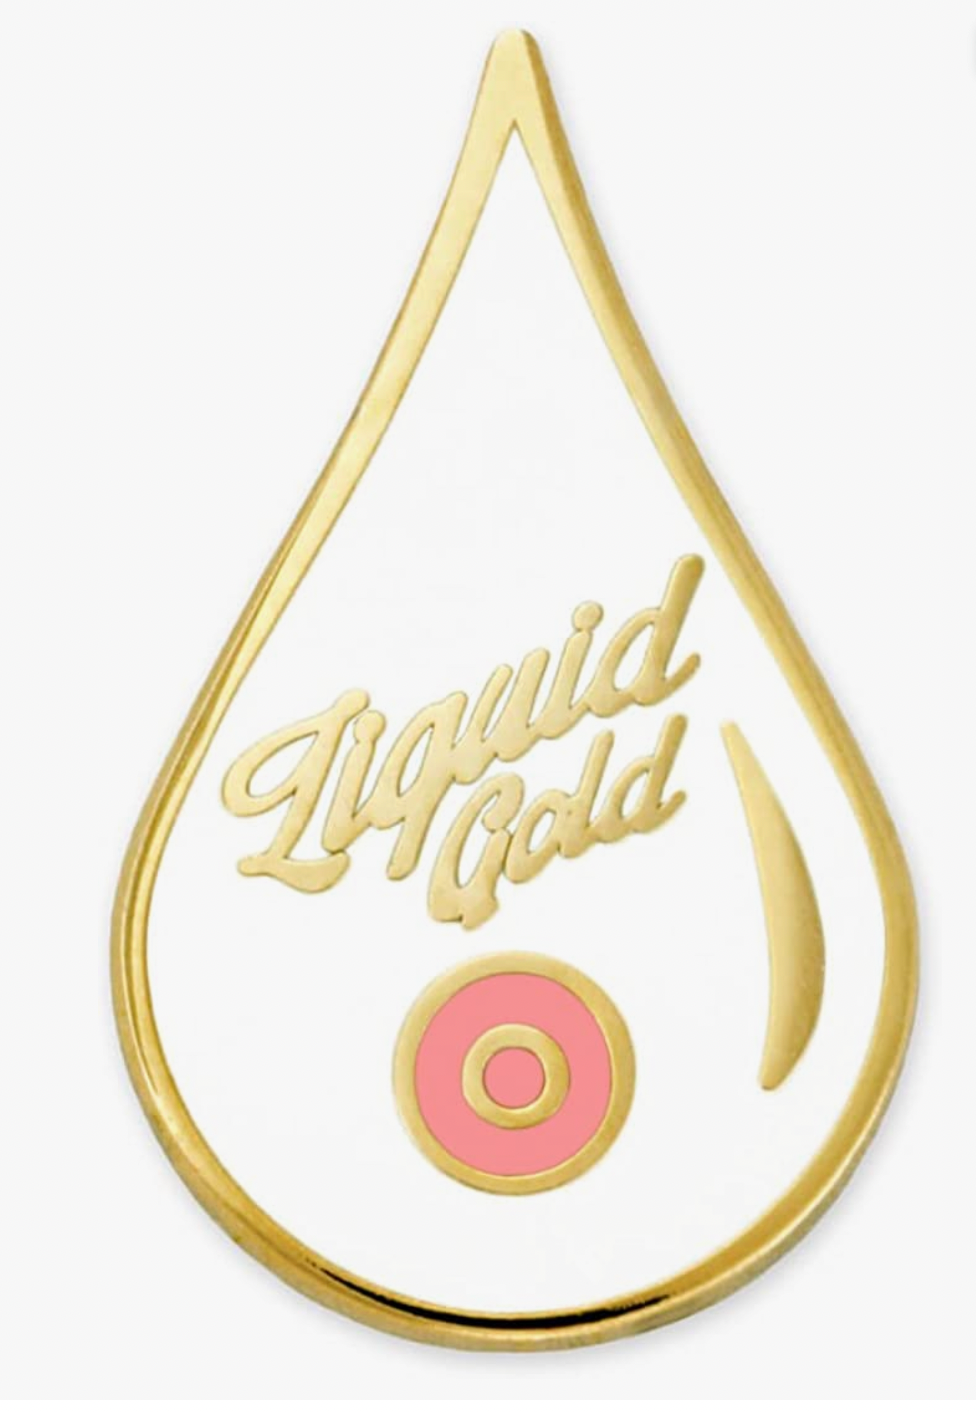 Liquid Gold Celebration Pin!